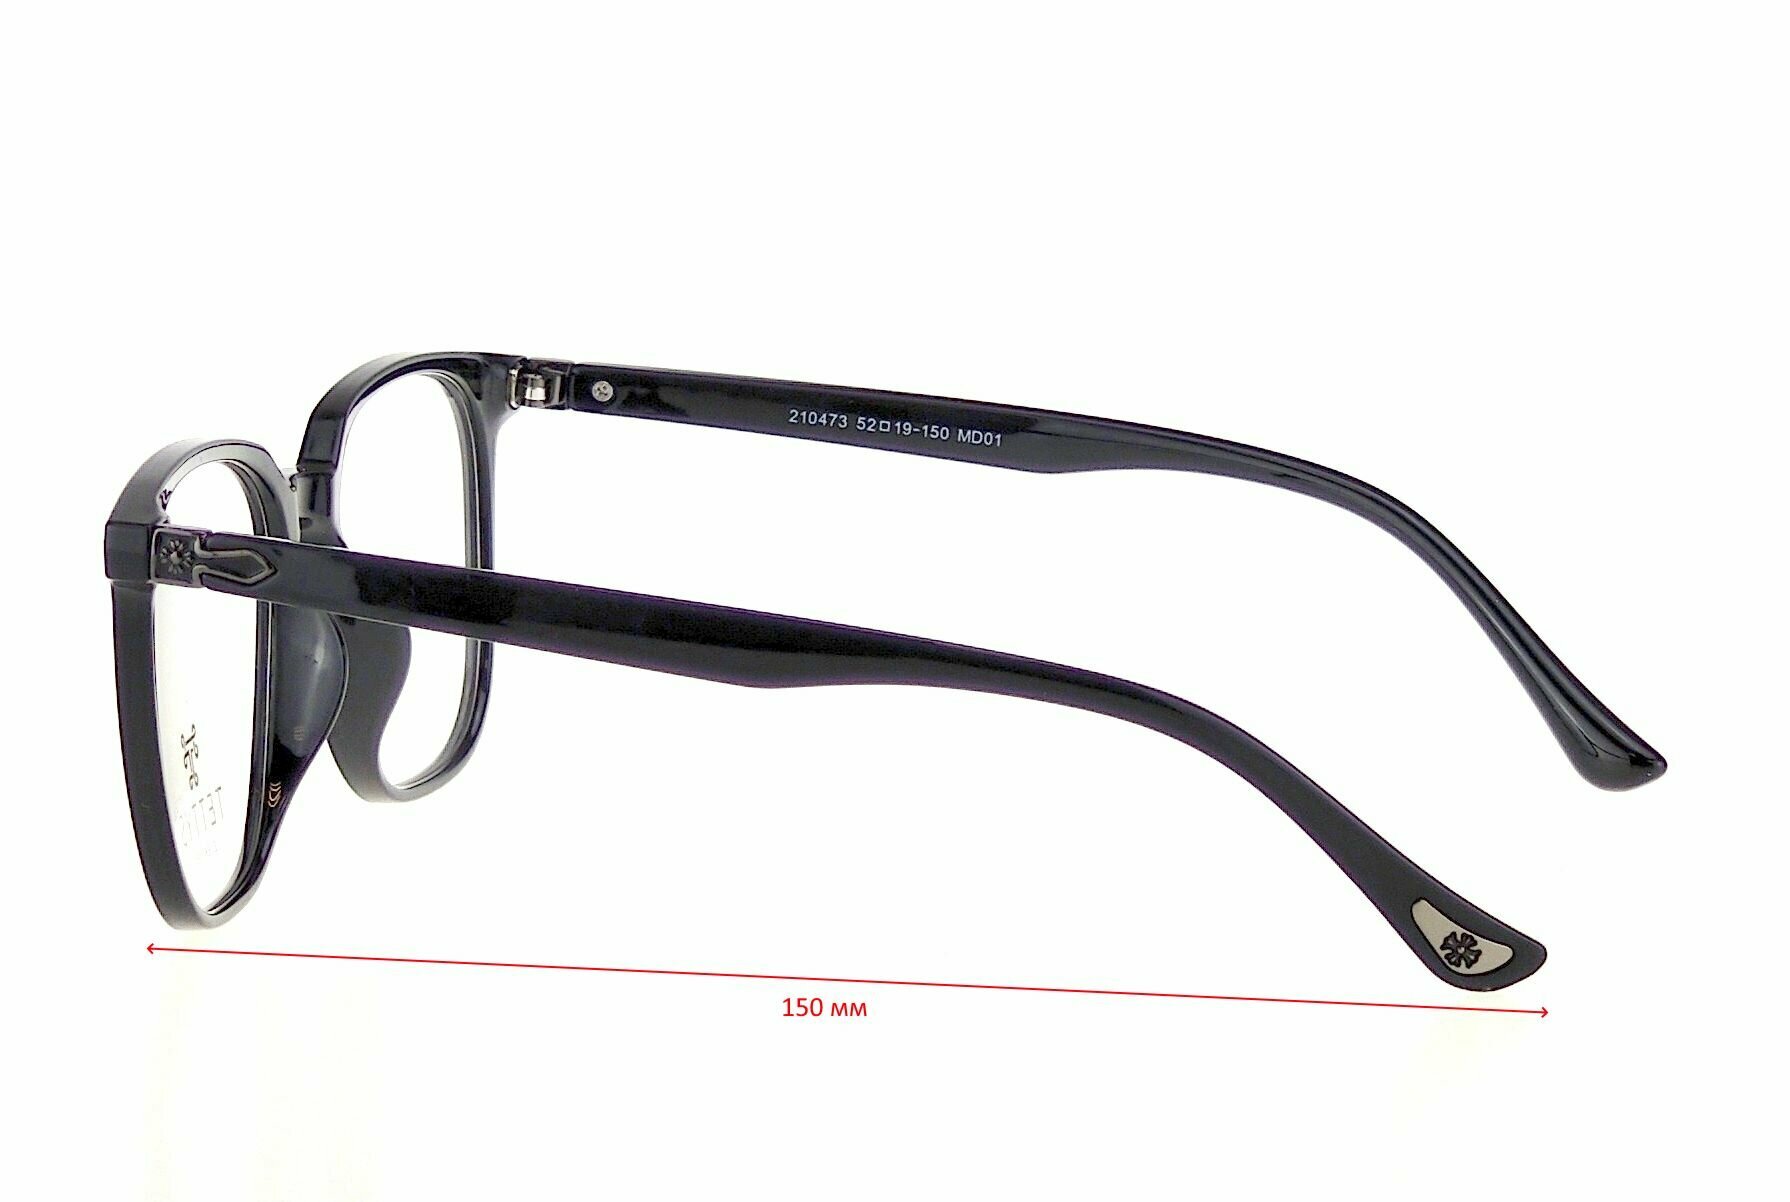 Фотохромные очки с футляром на магните TETTYS EYEWEAR мод. 210473 Цвет 1 с линзами ROMEO 1.56 FAST Photocolor BROWN, HMC+ +0.75 РЦ 64-66